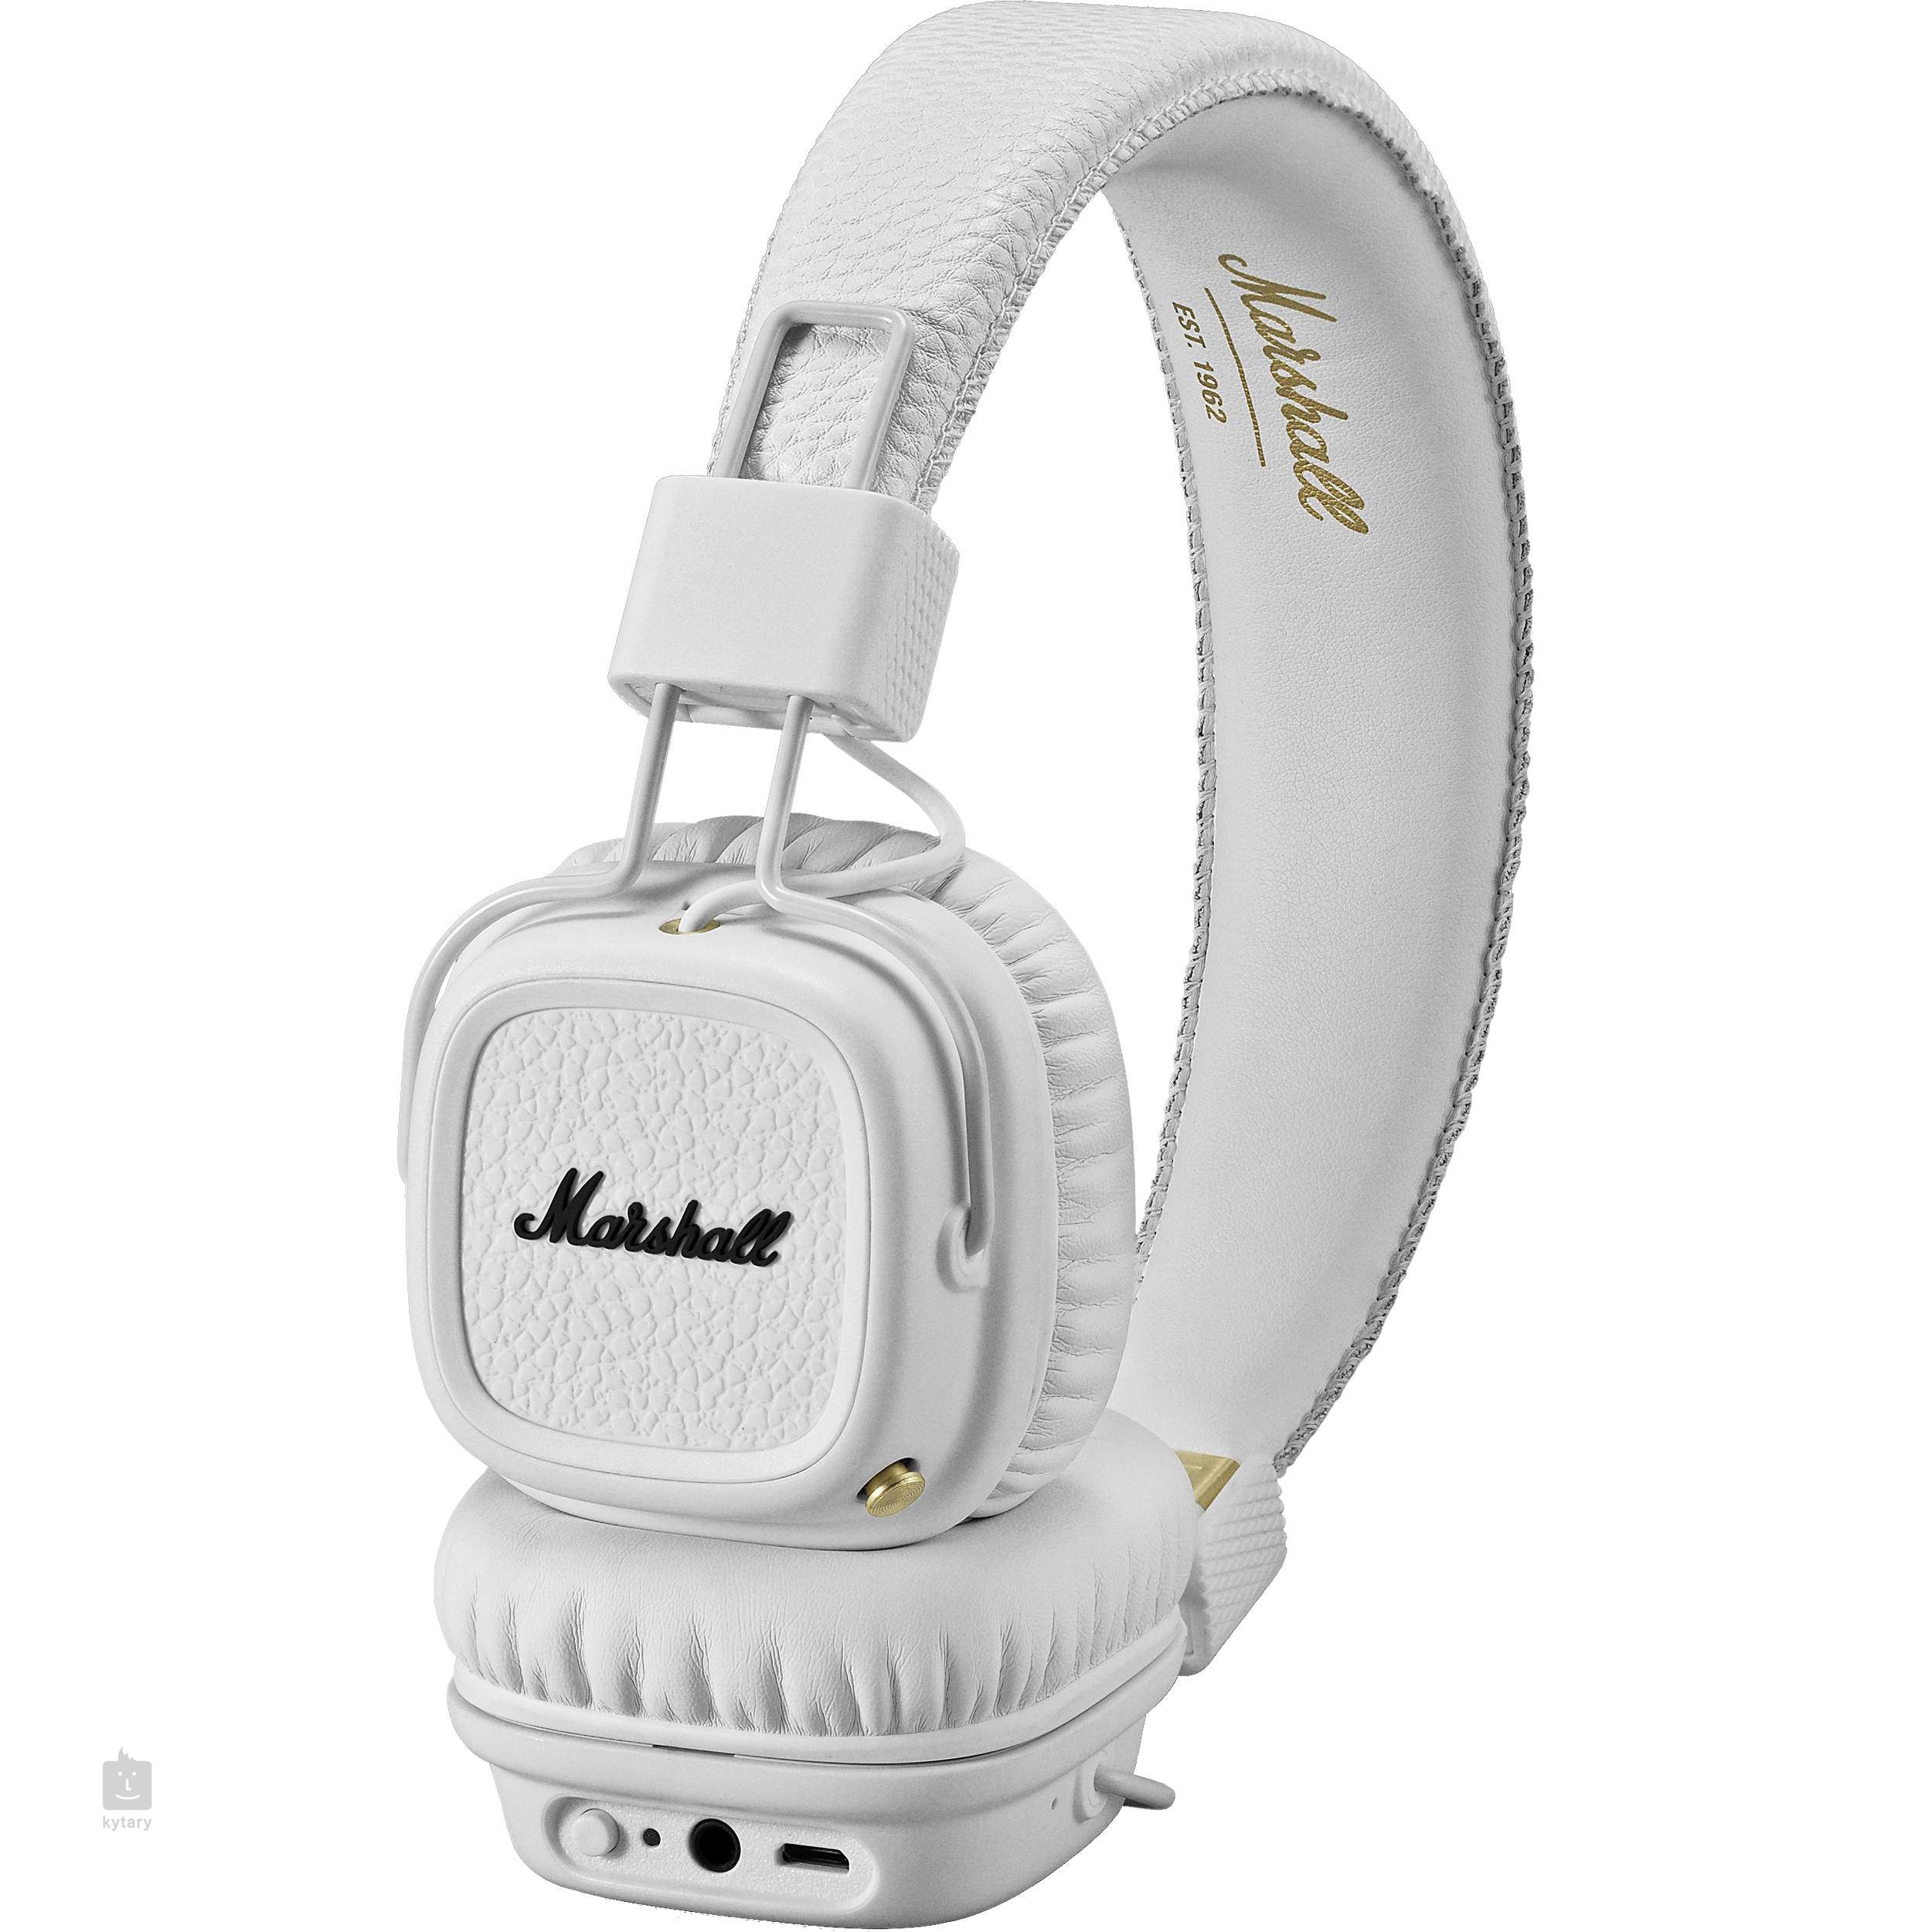 Audifonos Inalambricos Marshall MajorIII con Bluetooth -Cafe